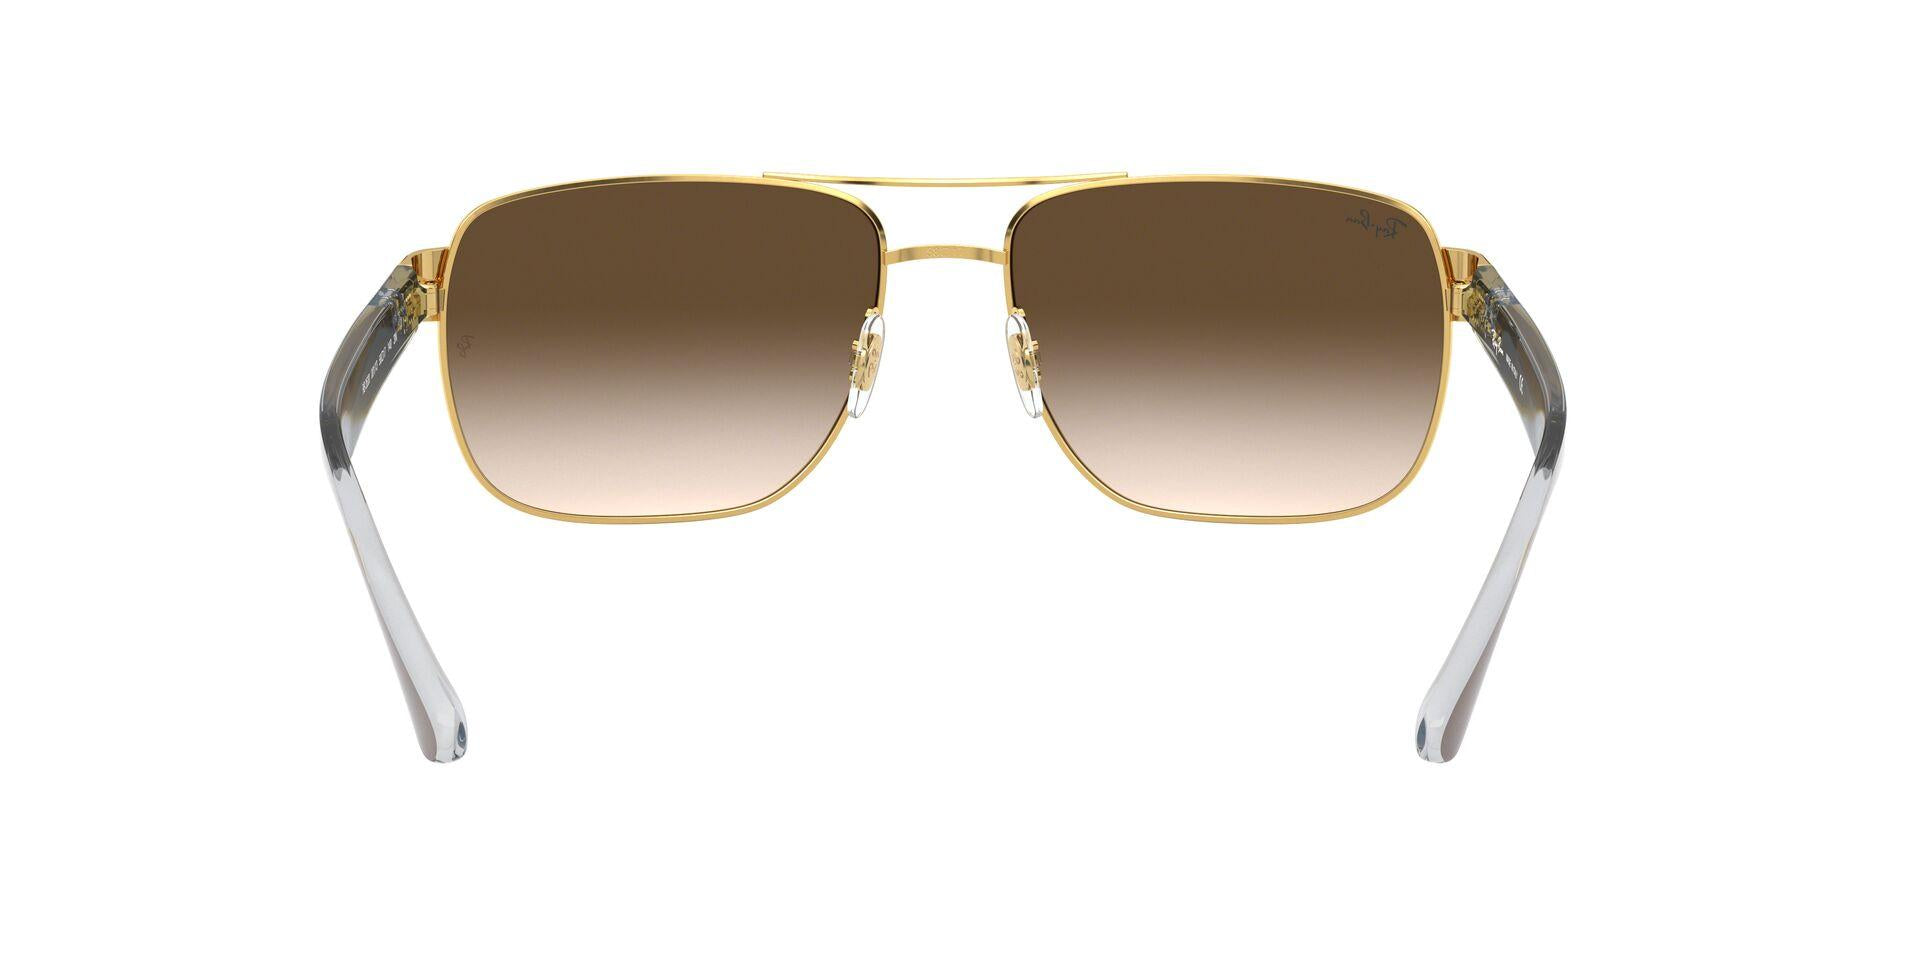 Ray Ban 3530 Sunglasses - shadieware